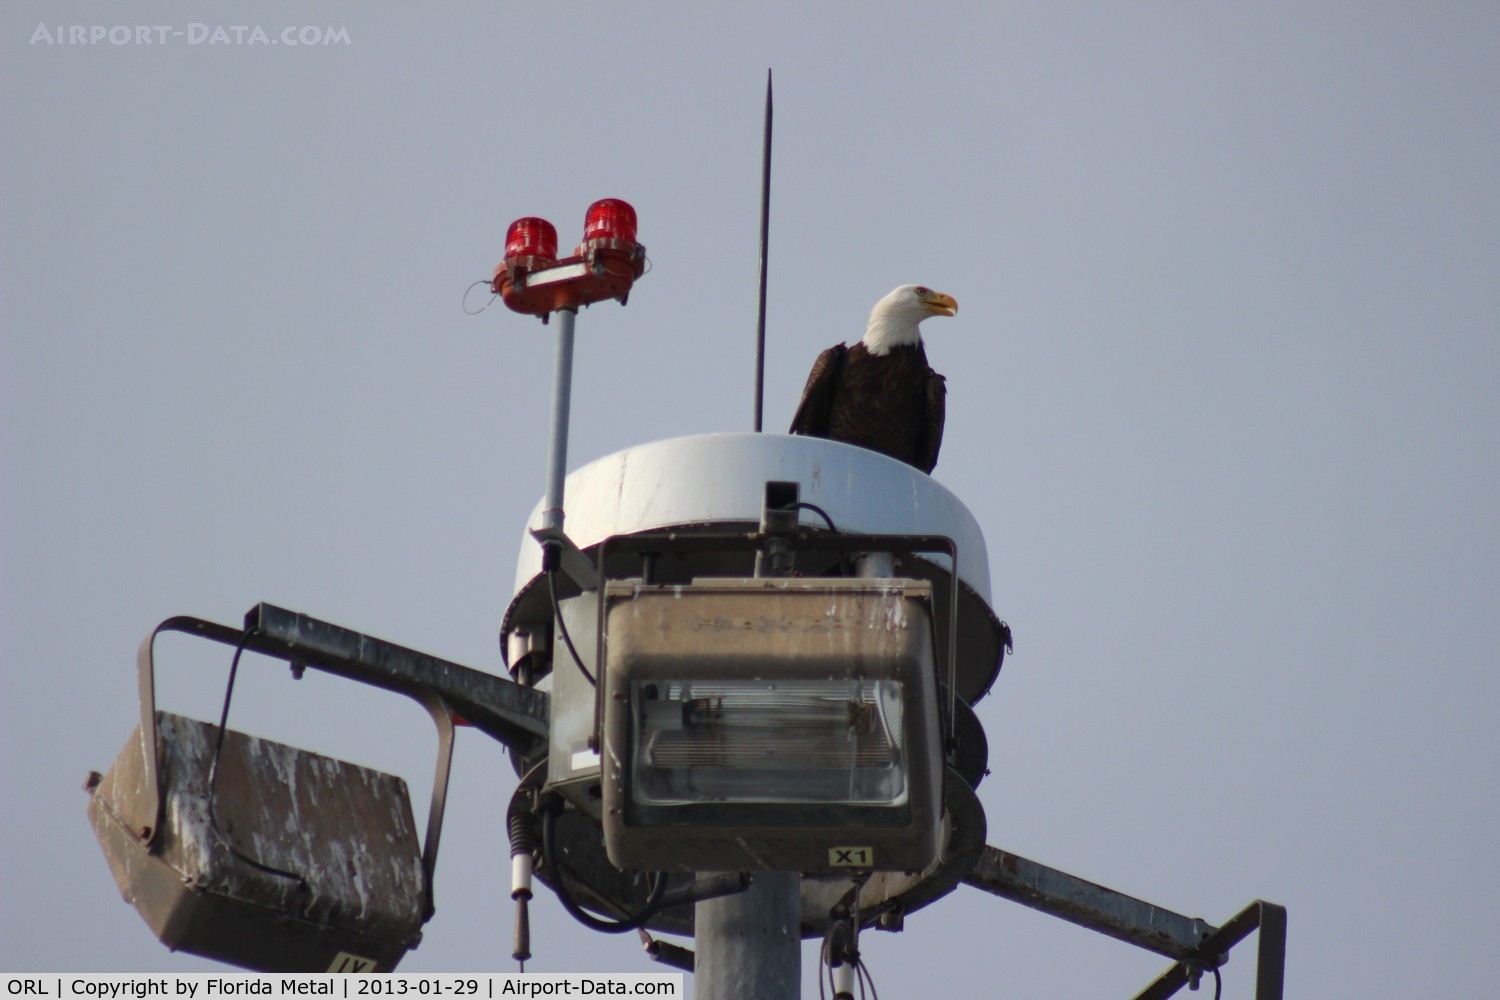 Executive Airport (ORL) - Bald eagle on the high mast ramp lights